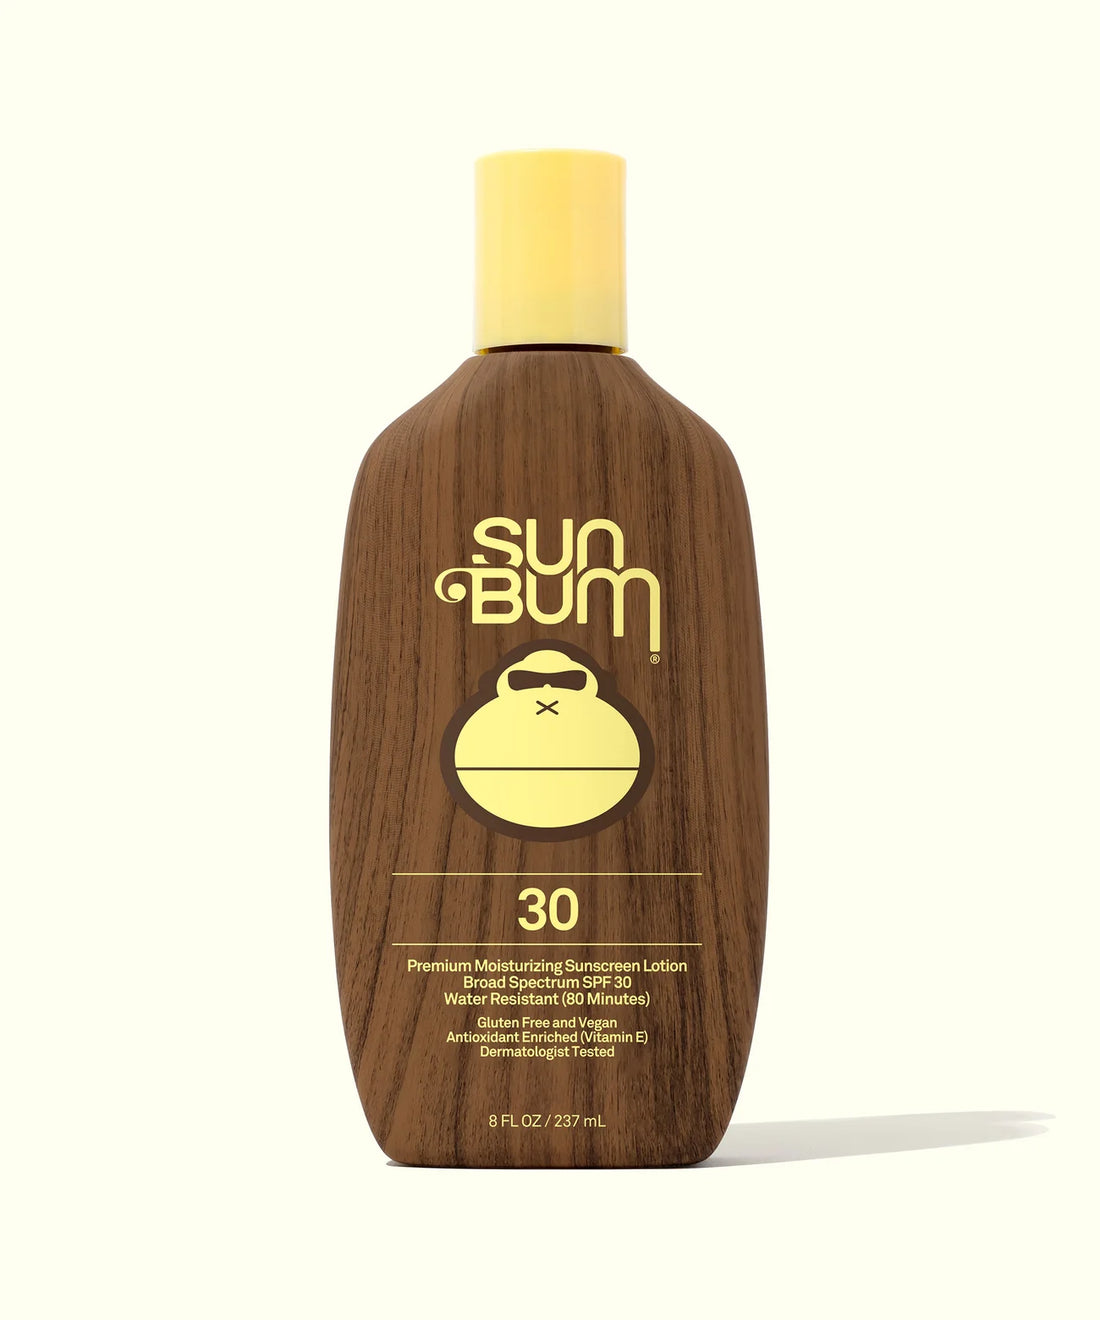 Sum Bum Original Sunscreen Lotion